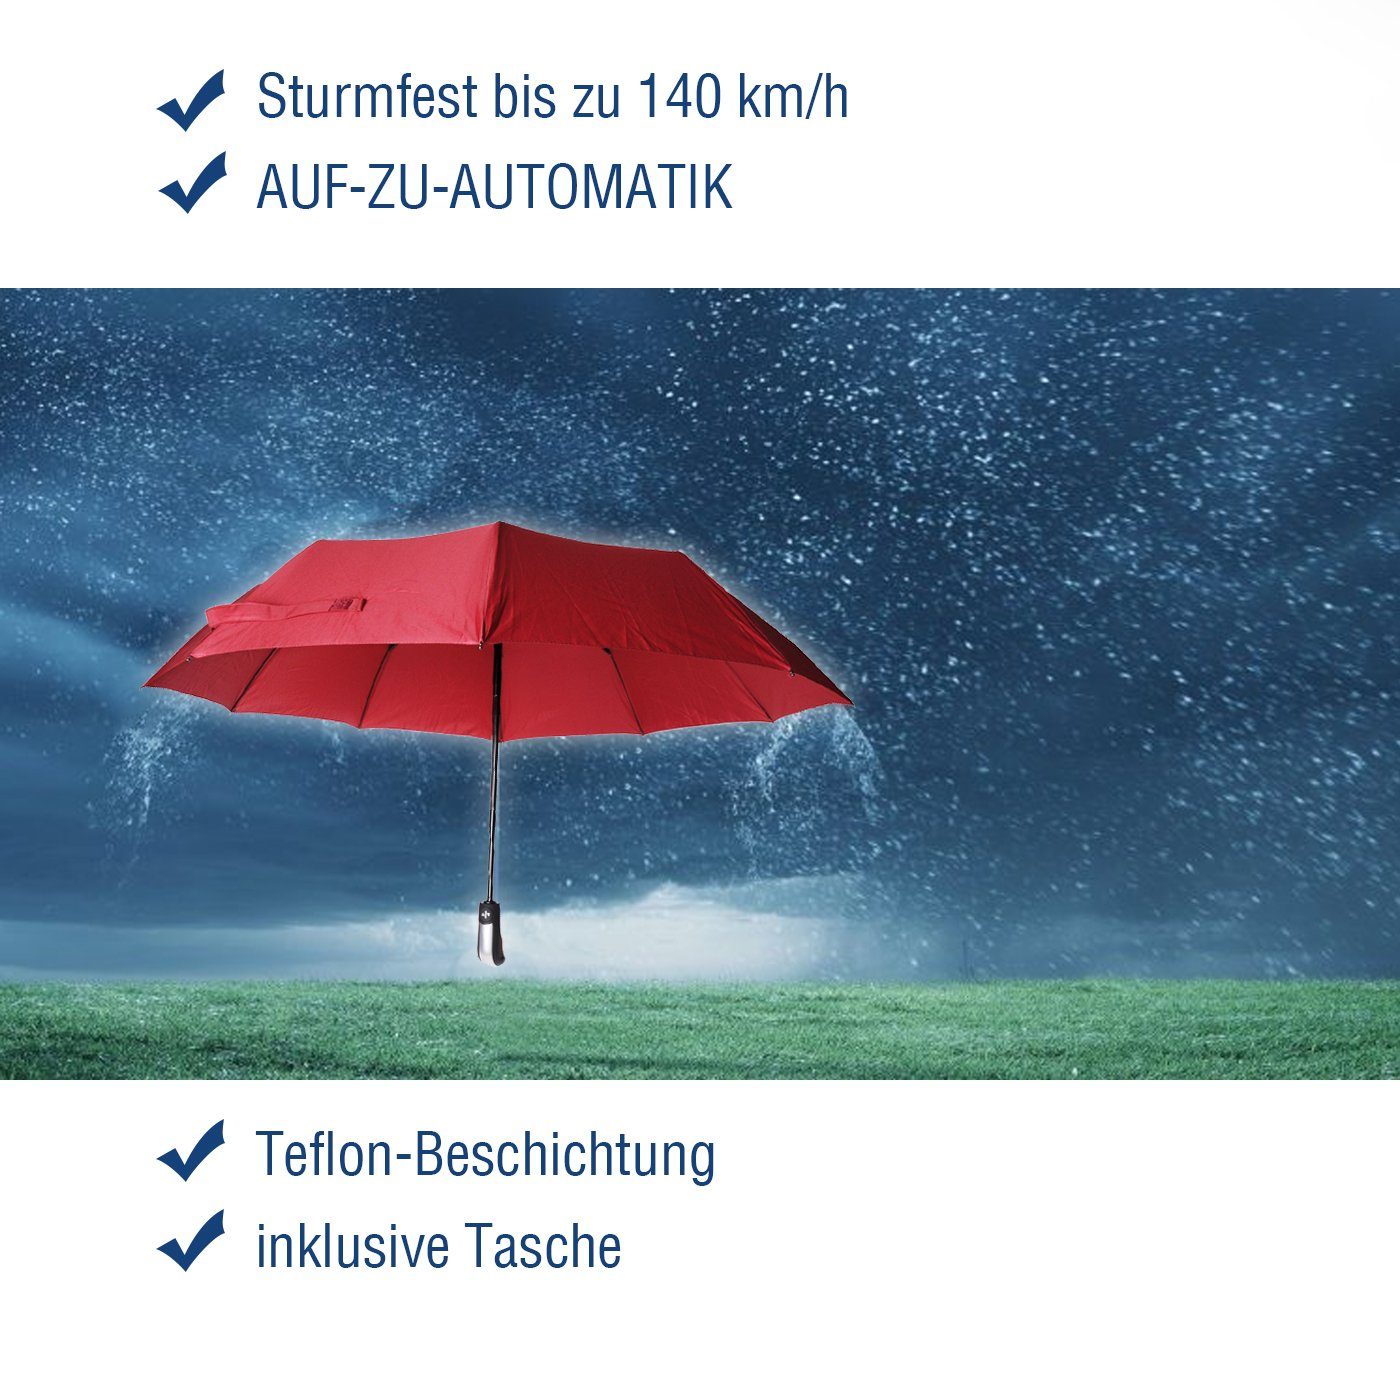 SHD Taschenregenschirm Sturmfester Autom.-Regenschirm Tasche Teflon mit inkl. Beschichtung